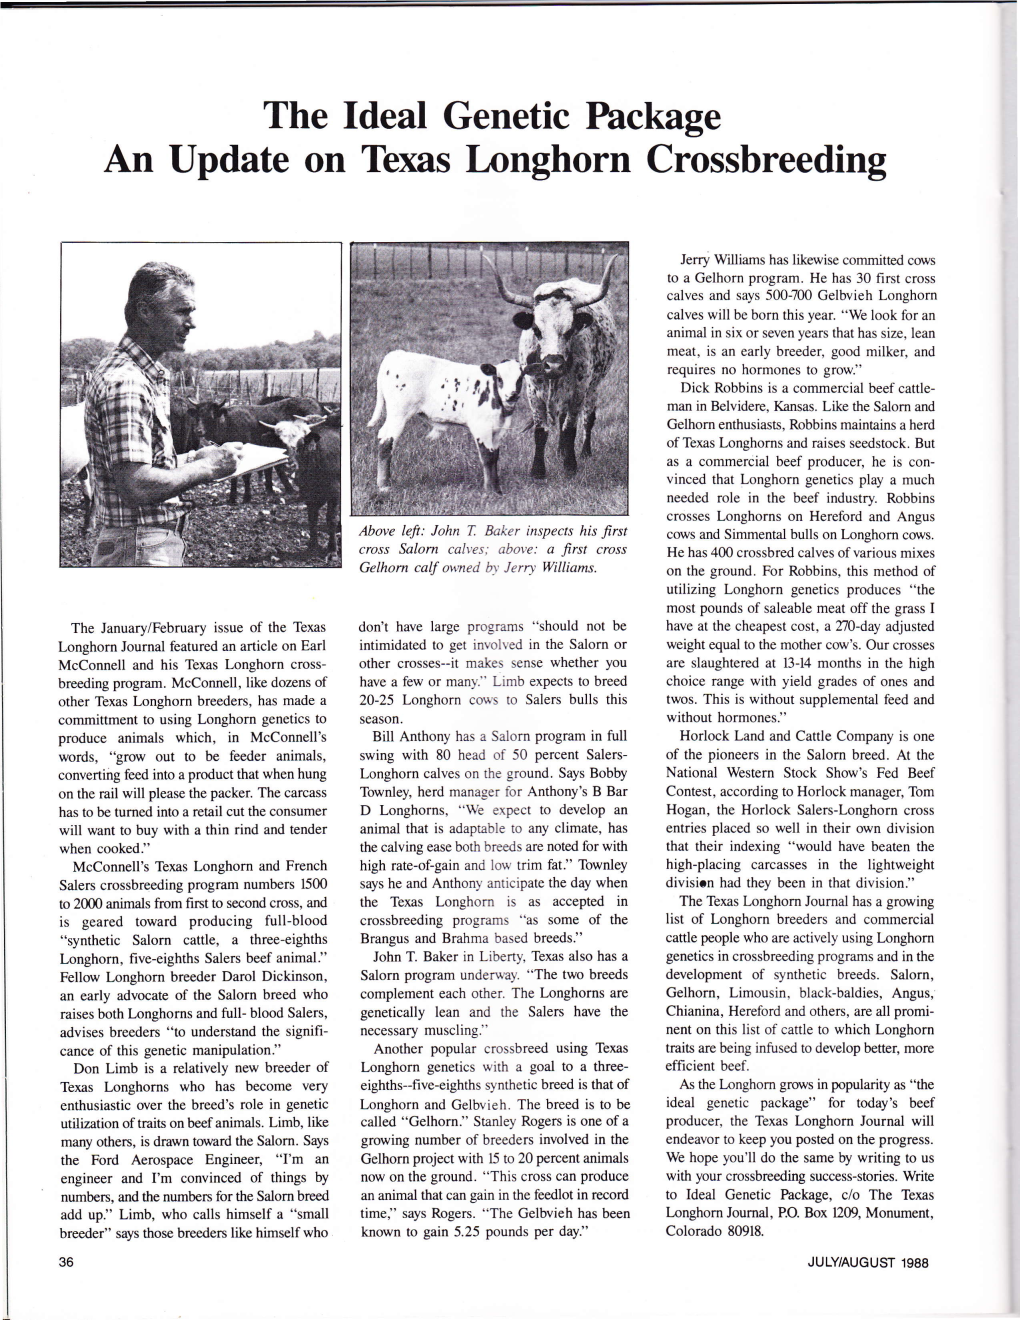 The Ldeal Genetic Package an Update on Texas Longhorn Crossbreeding